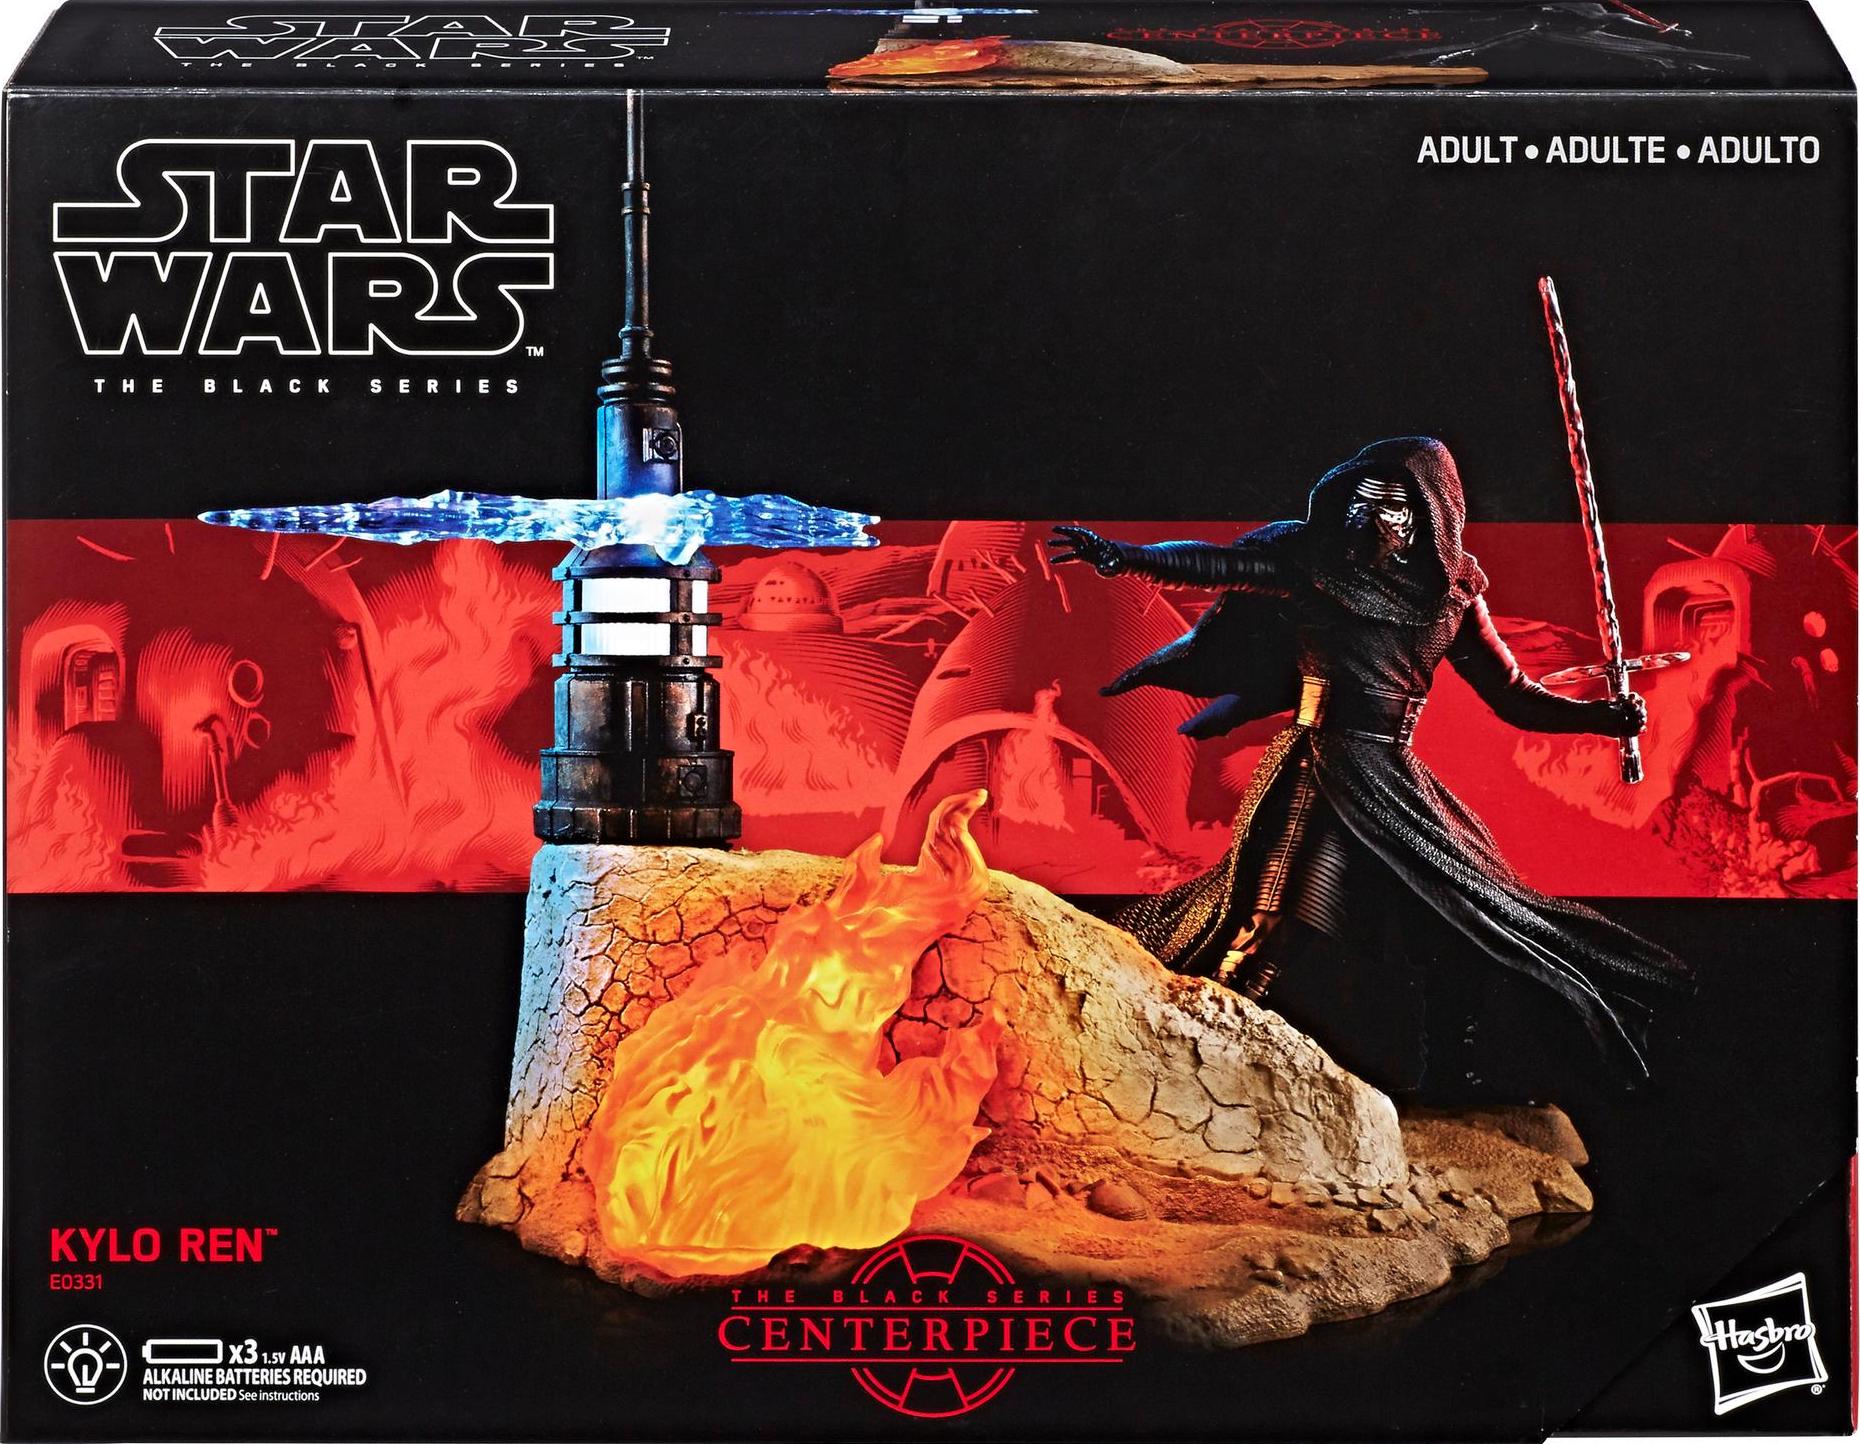 Hasbro Star Wars The Black Series Centerpiece Kylo Ren Action Figure for sale online